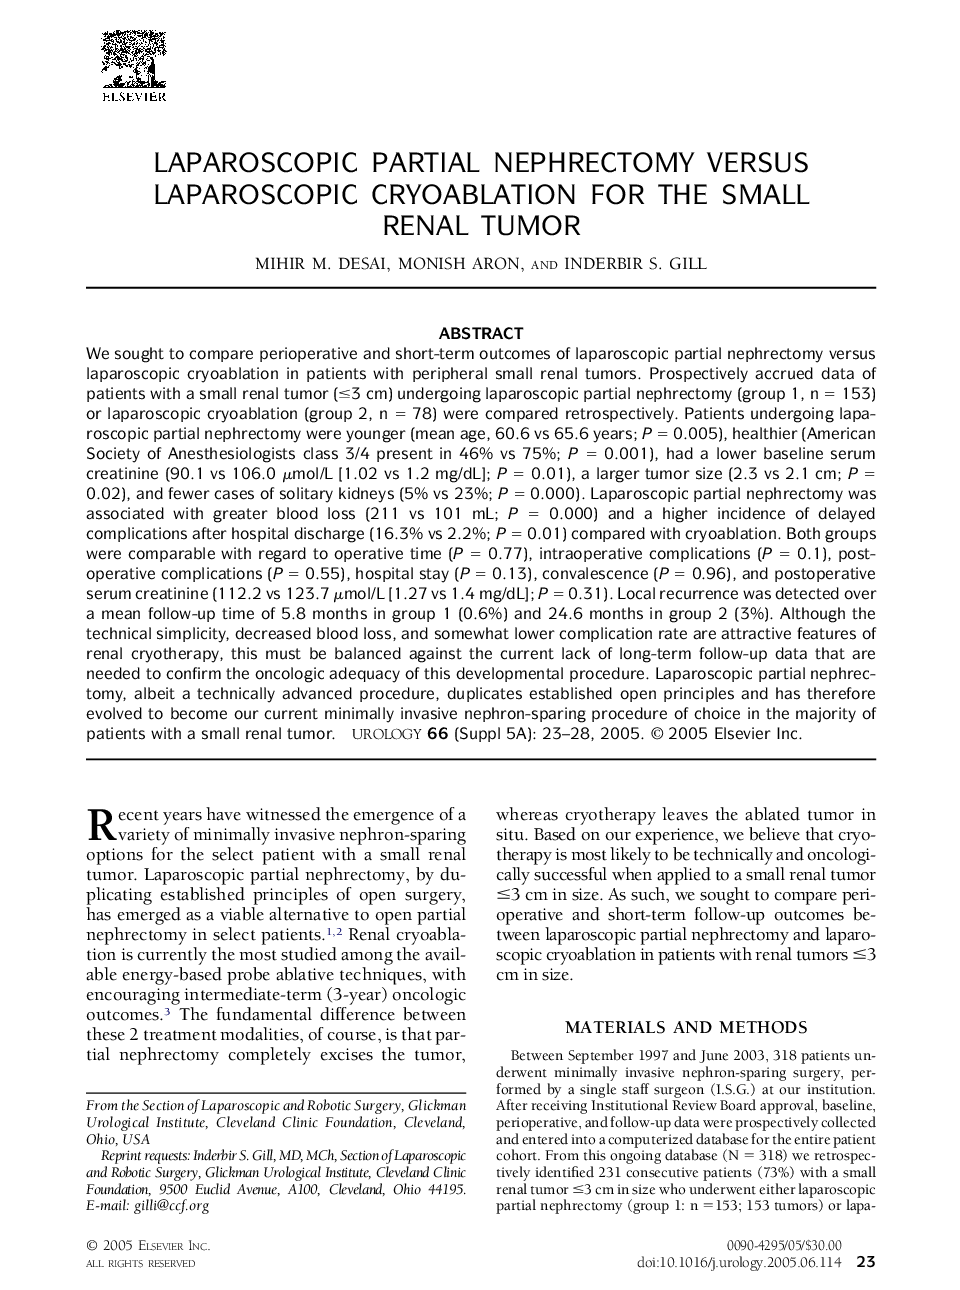 Laparoscopic partial nephrectomy versus laparoscopic cryoablation for the small renal tumor